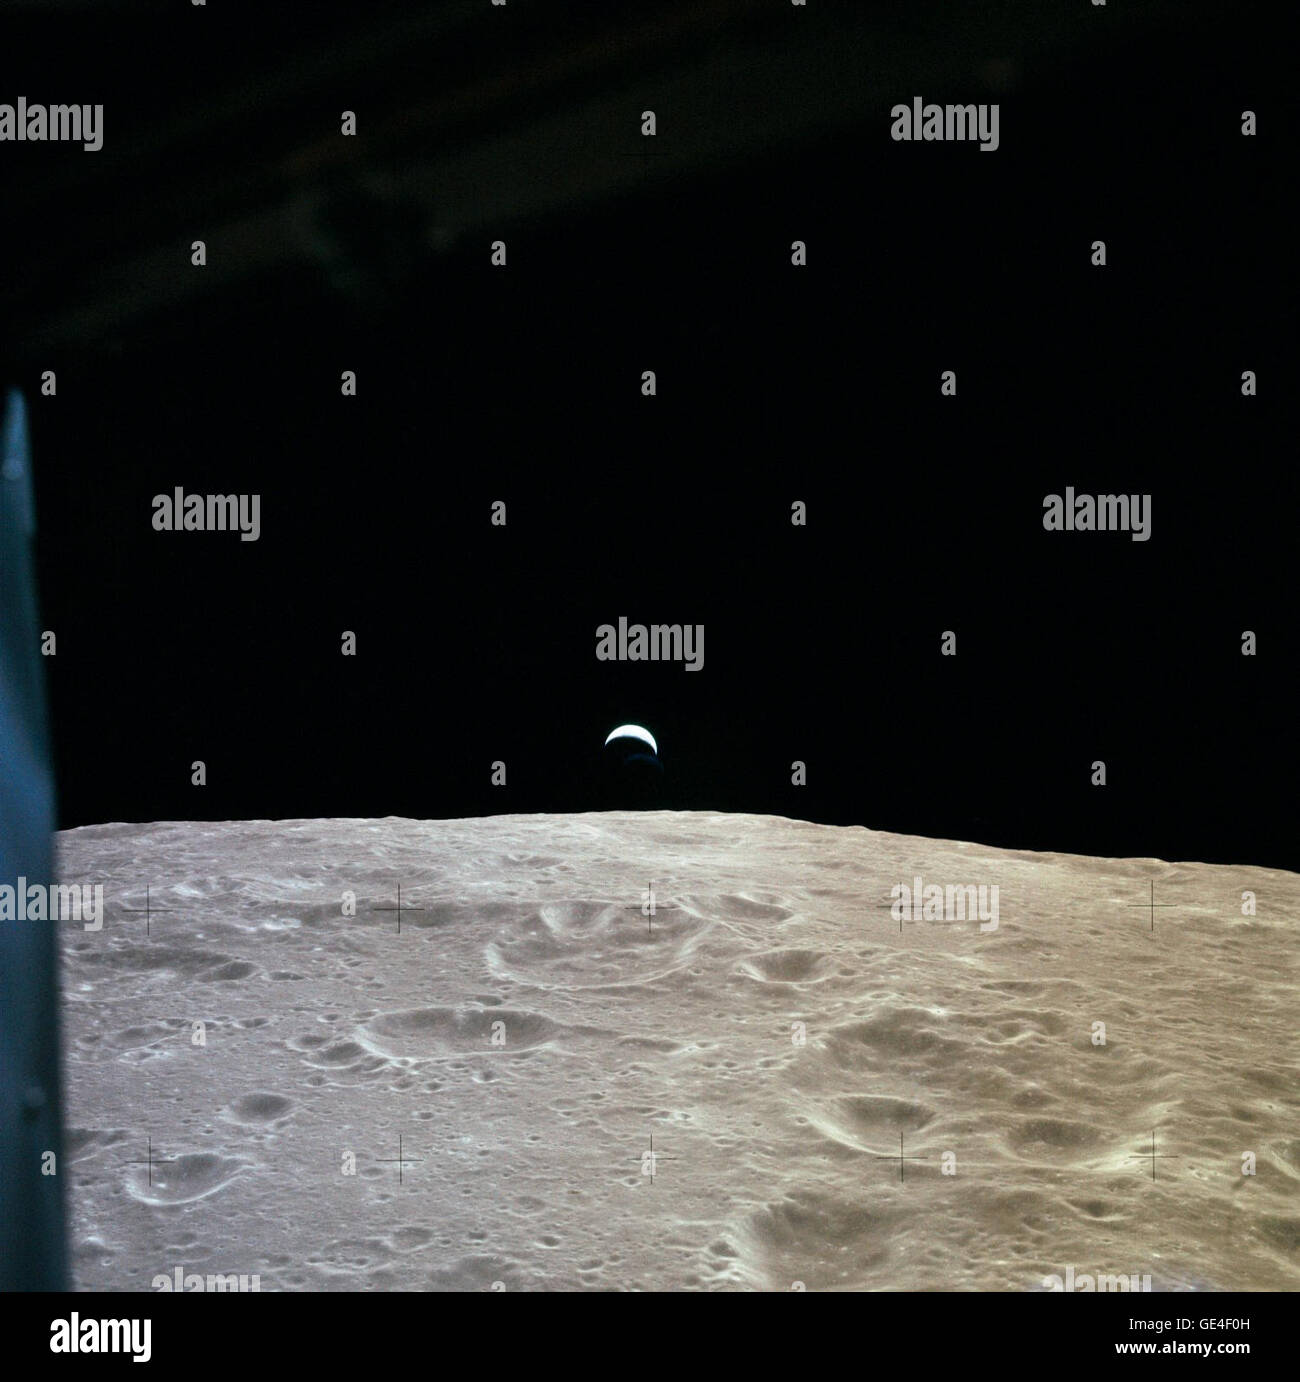 Apollo 12 Mission Image 5052125307 o Stock Photo